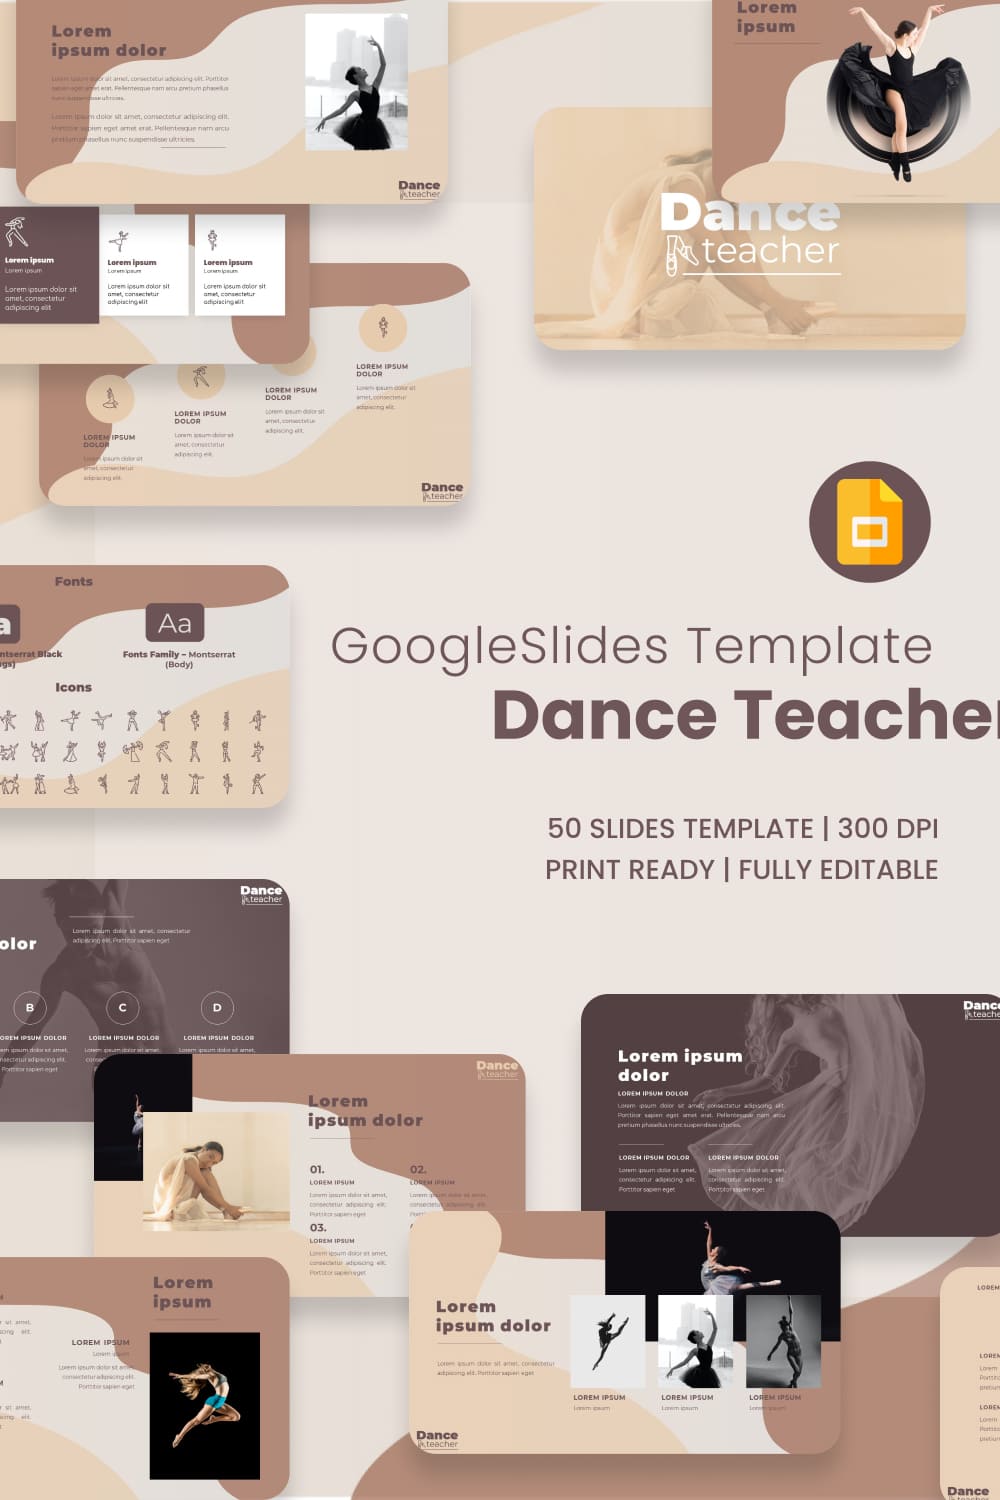 Dance Teacher Template in Google Slide.